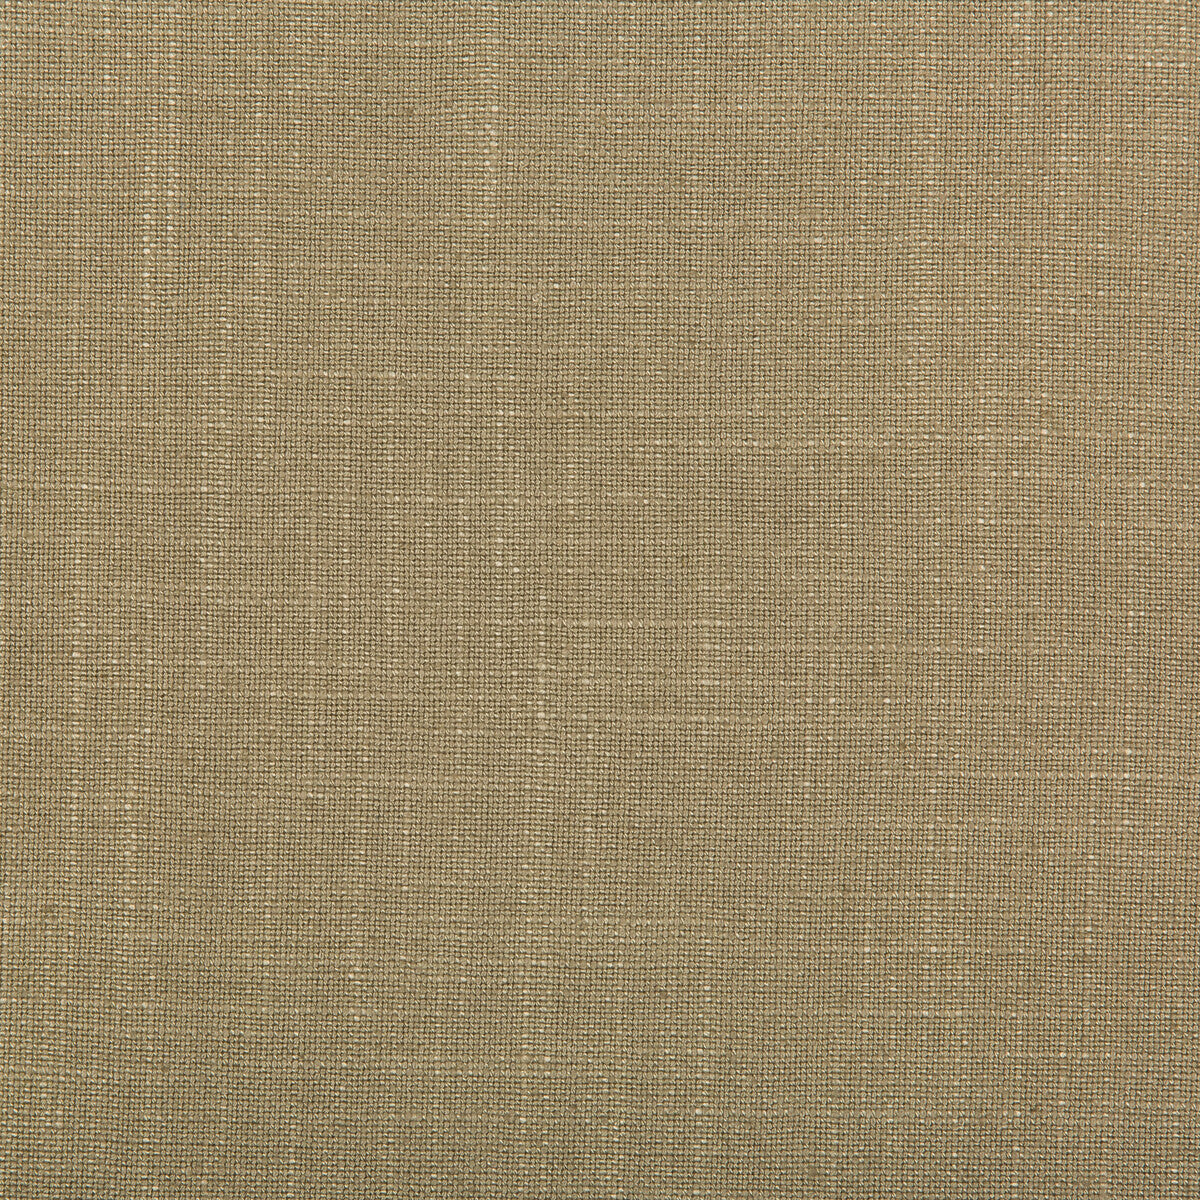 Aura fabric in tea color - pattern 35520.16.0 - by Kravet Design